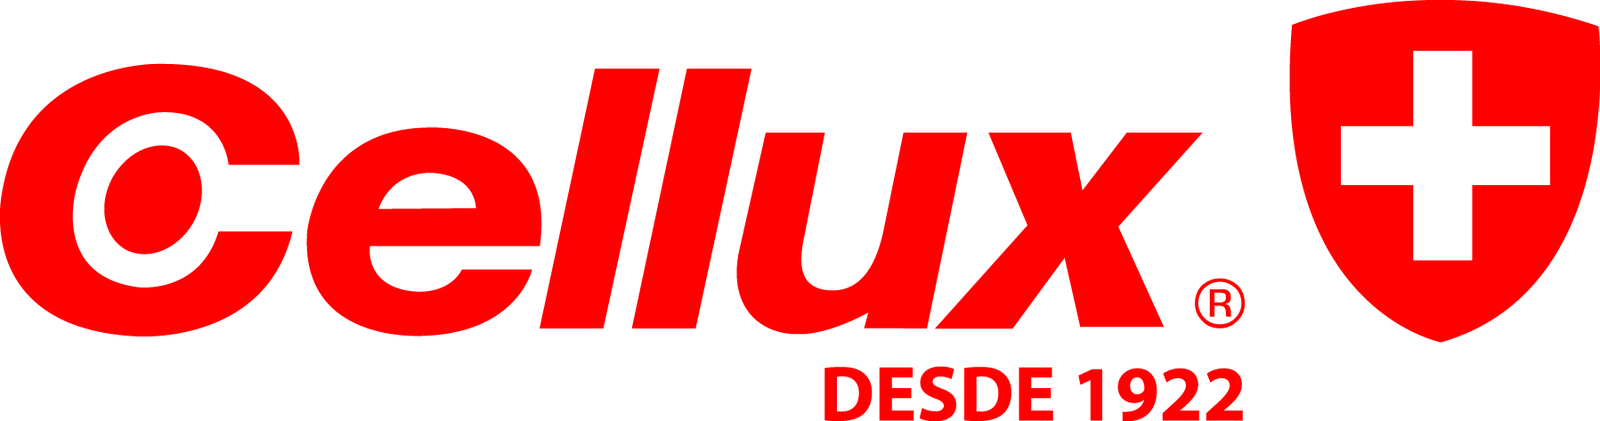 Cellux Logo, desde 1922